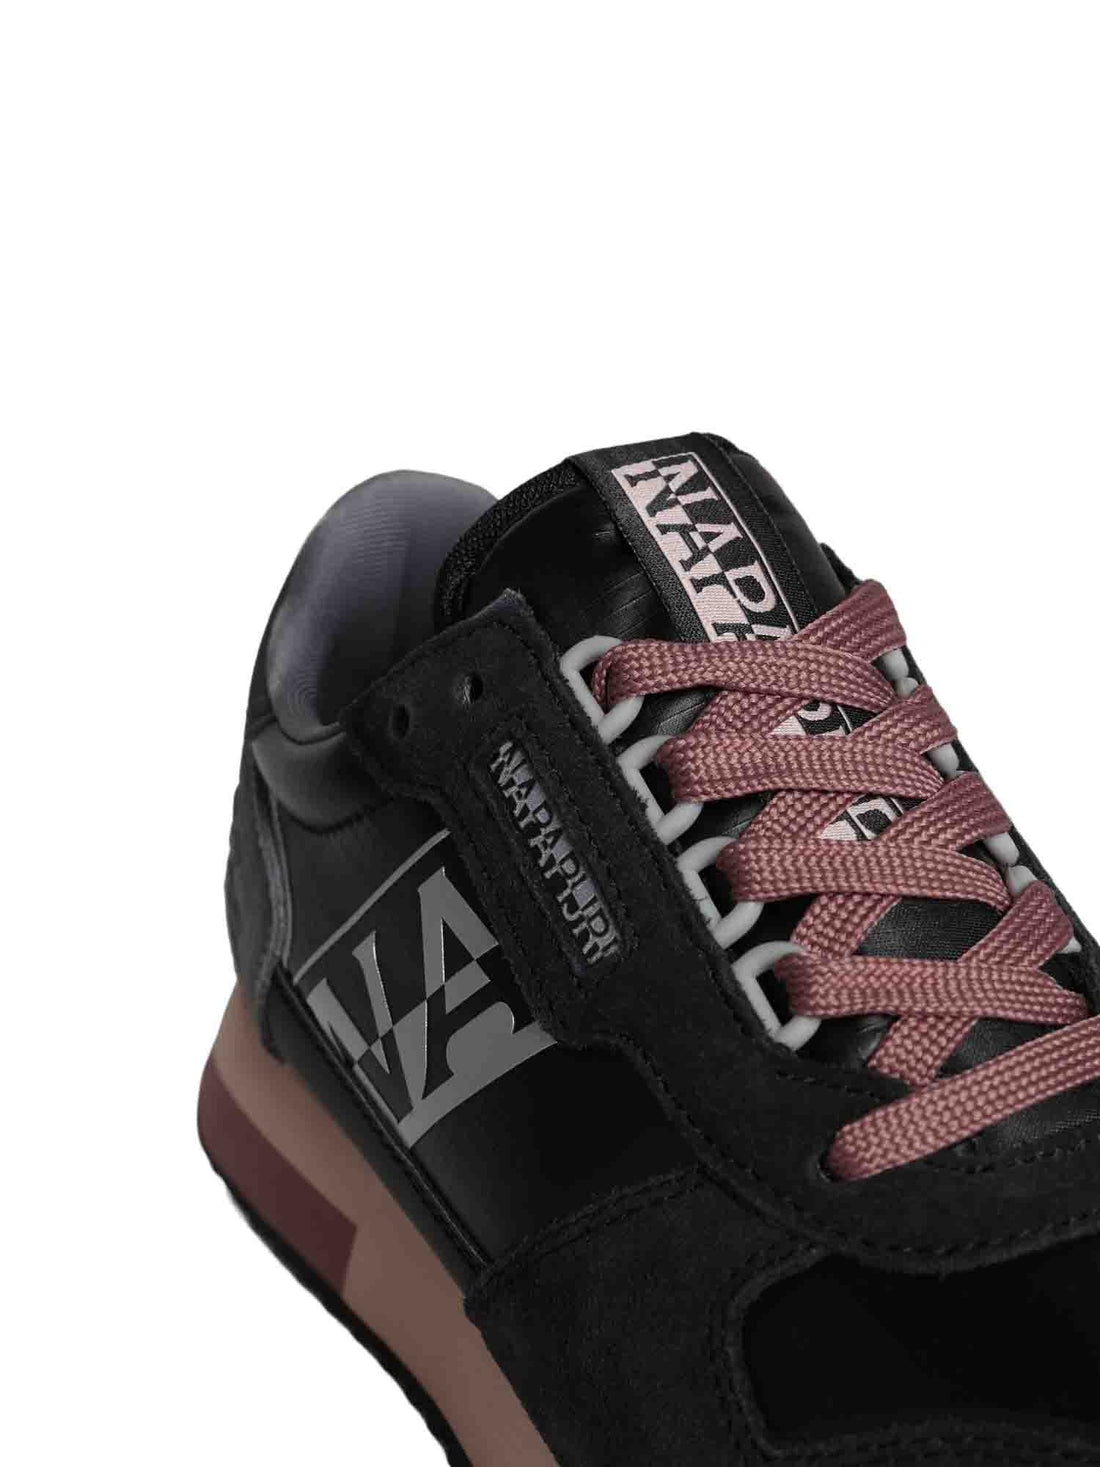 Sneakers Nero Napapijri